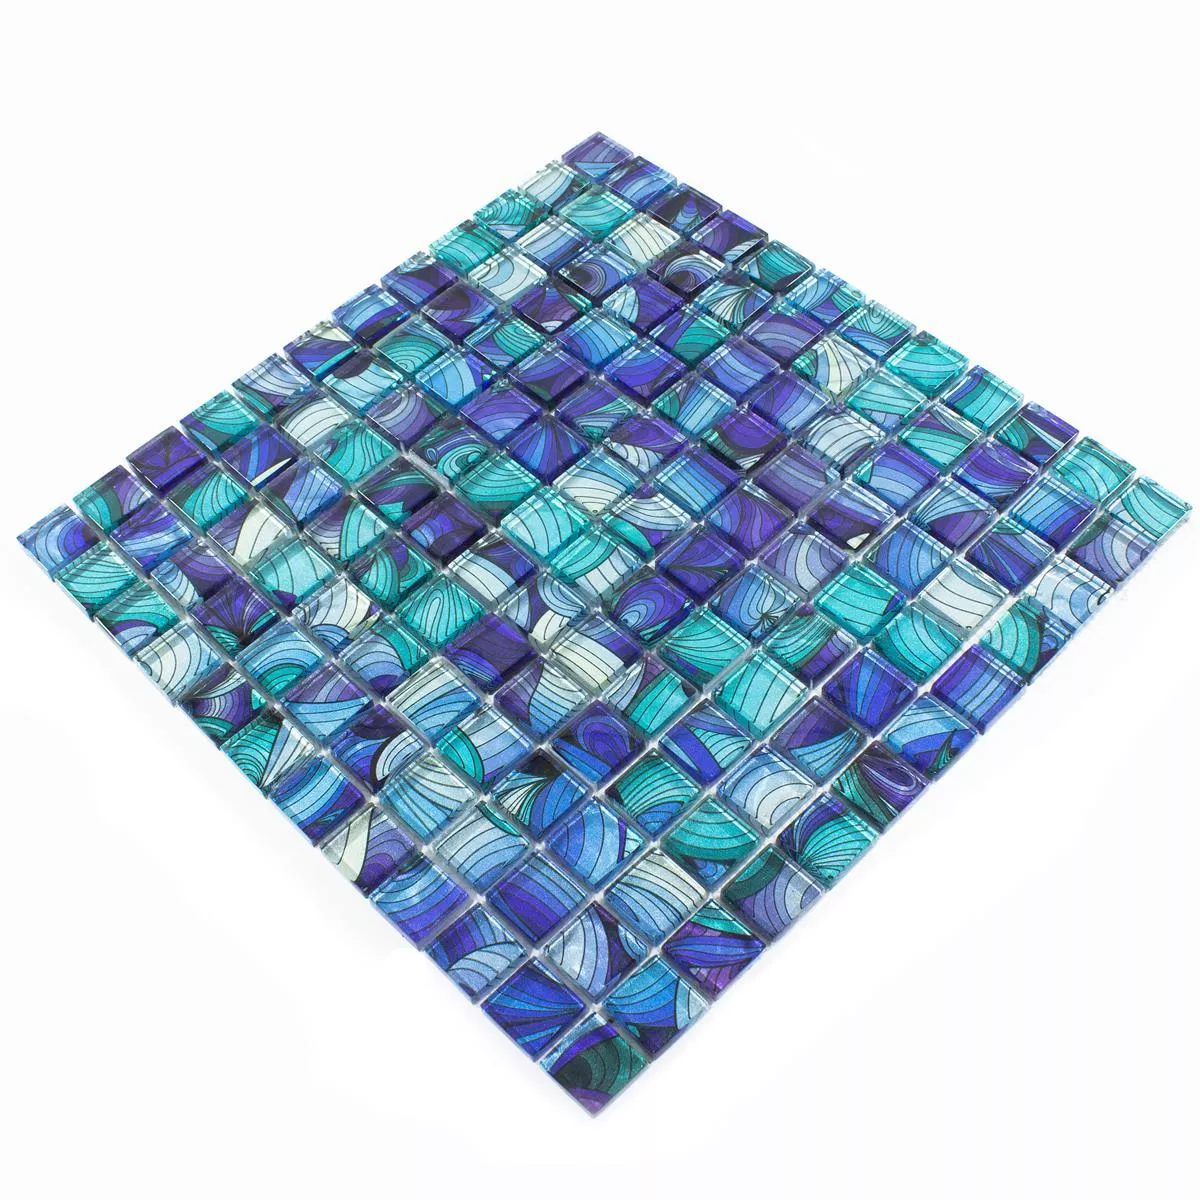 Campione Mosaico Di Vetro Piastrelle Atlantis Blu Turchese